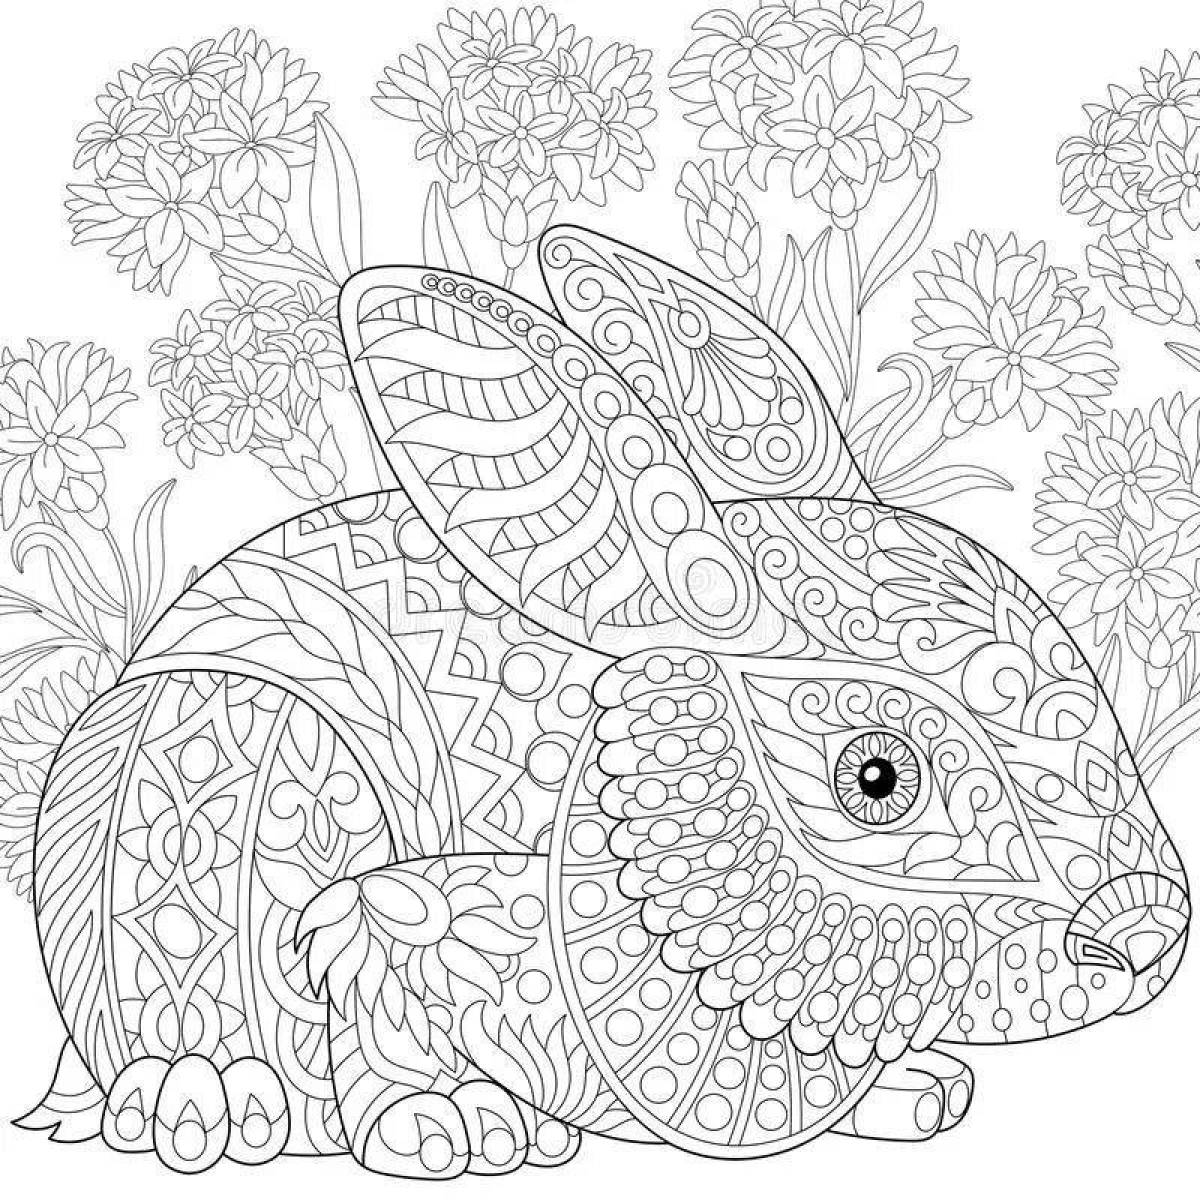 Blissful anti-stress rabbit coloring book